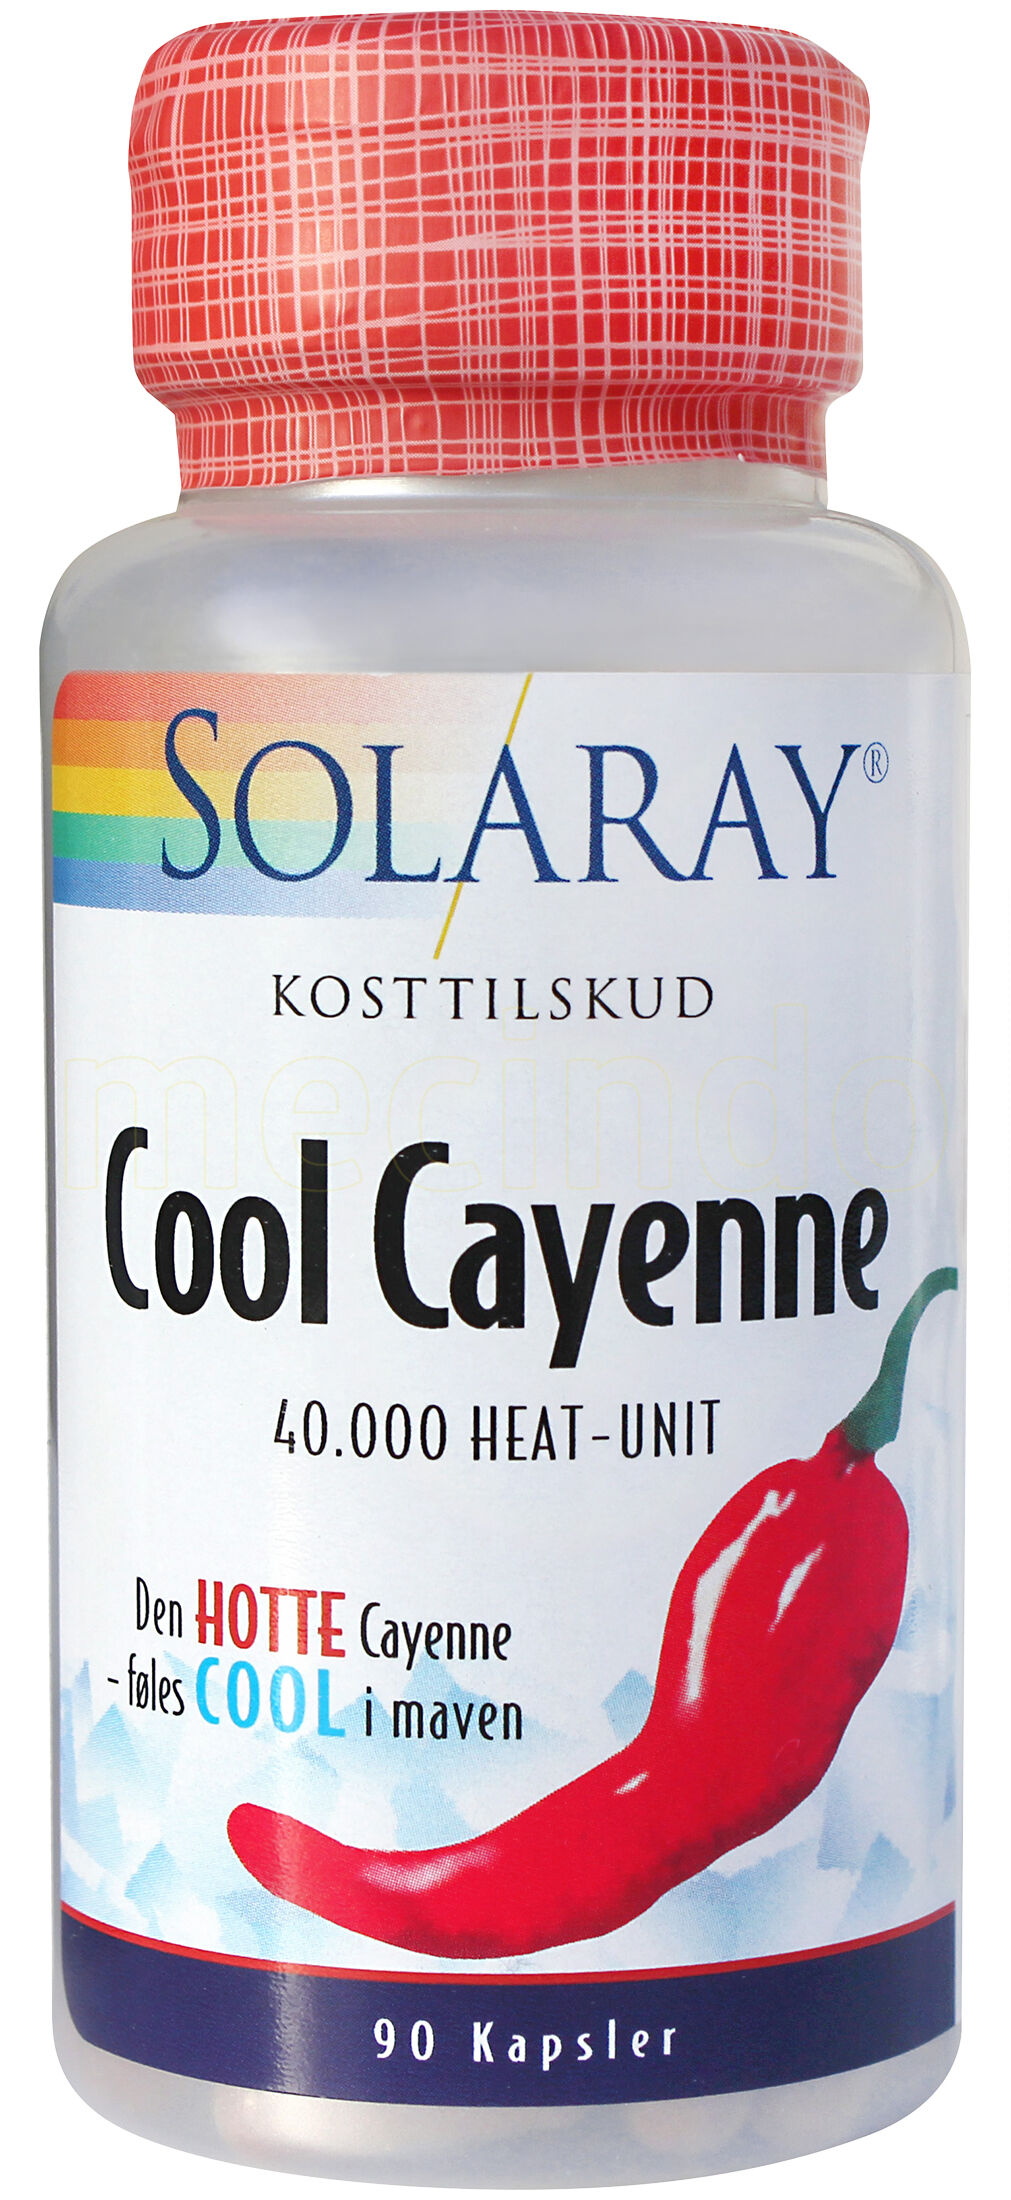 Solaray Cool Cayenne - 90 Kapsler